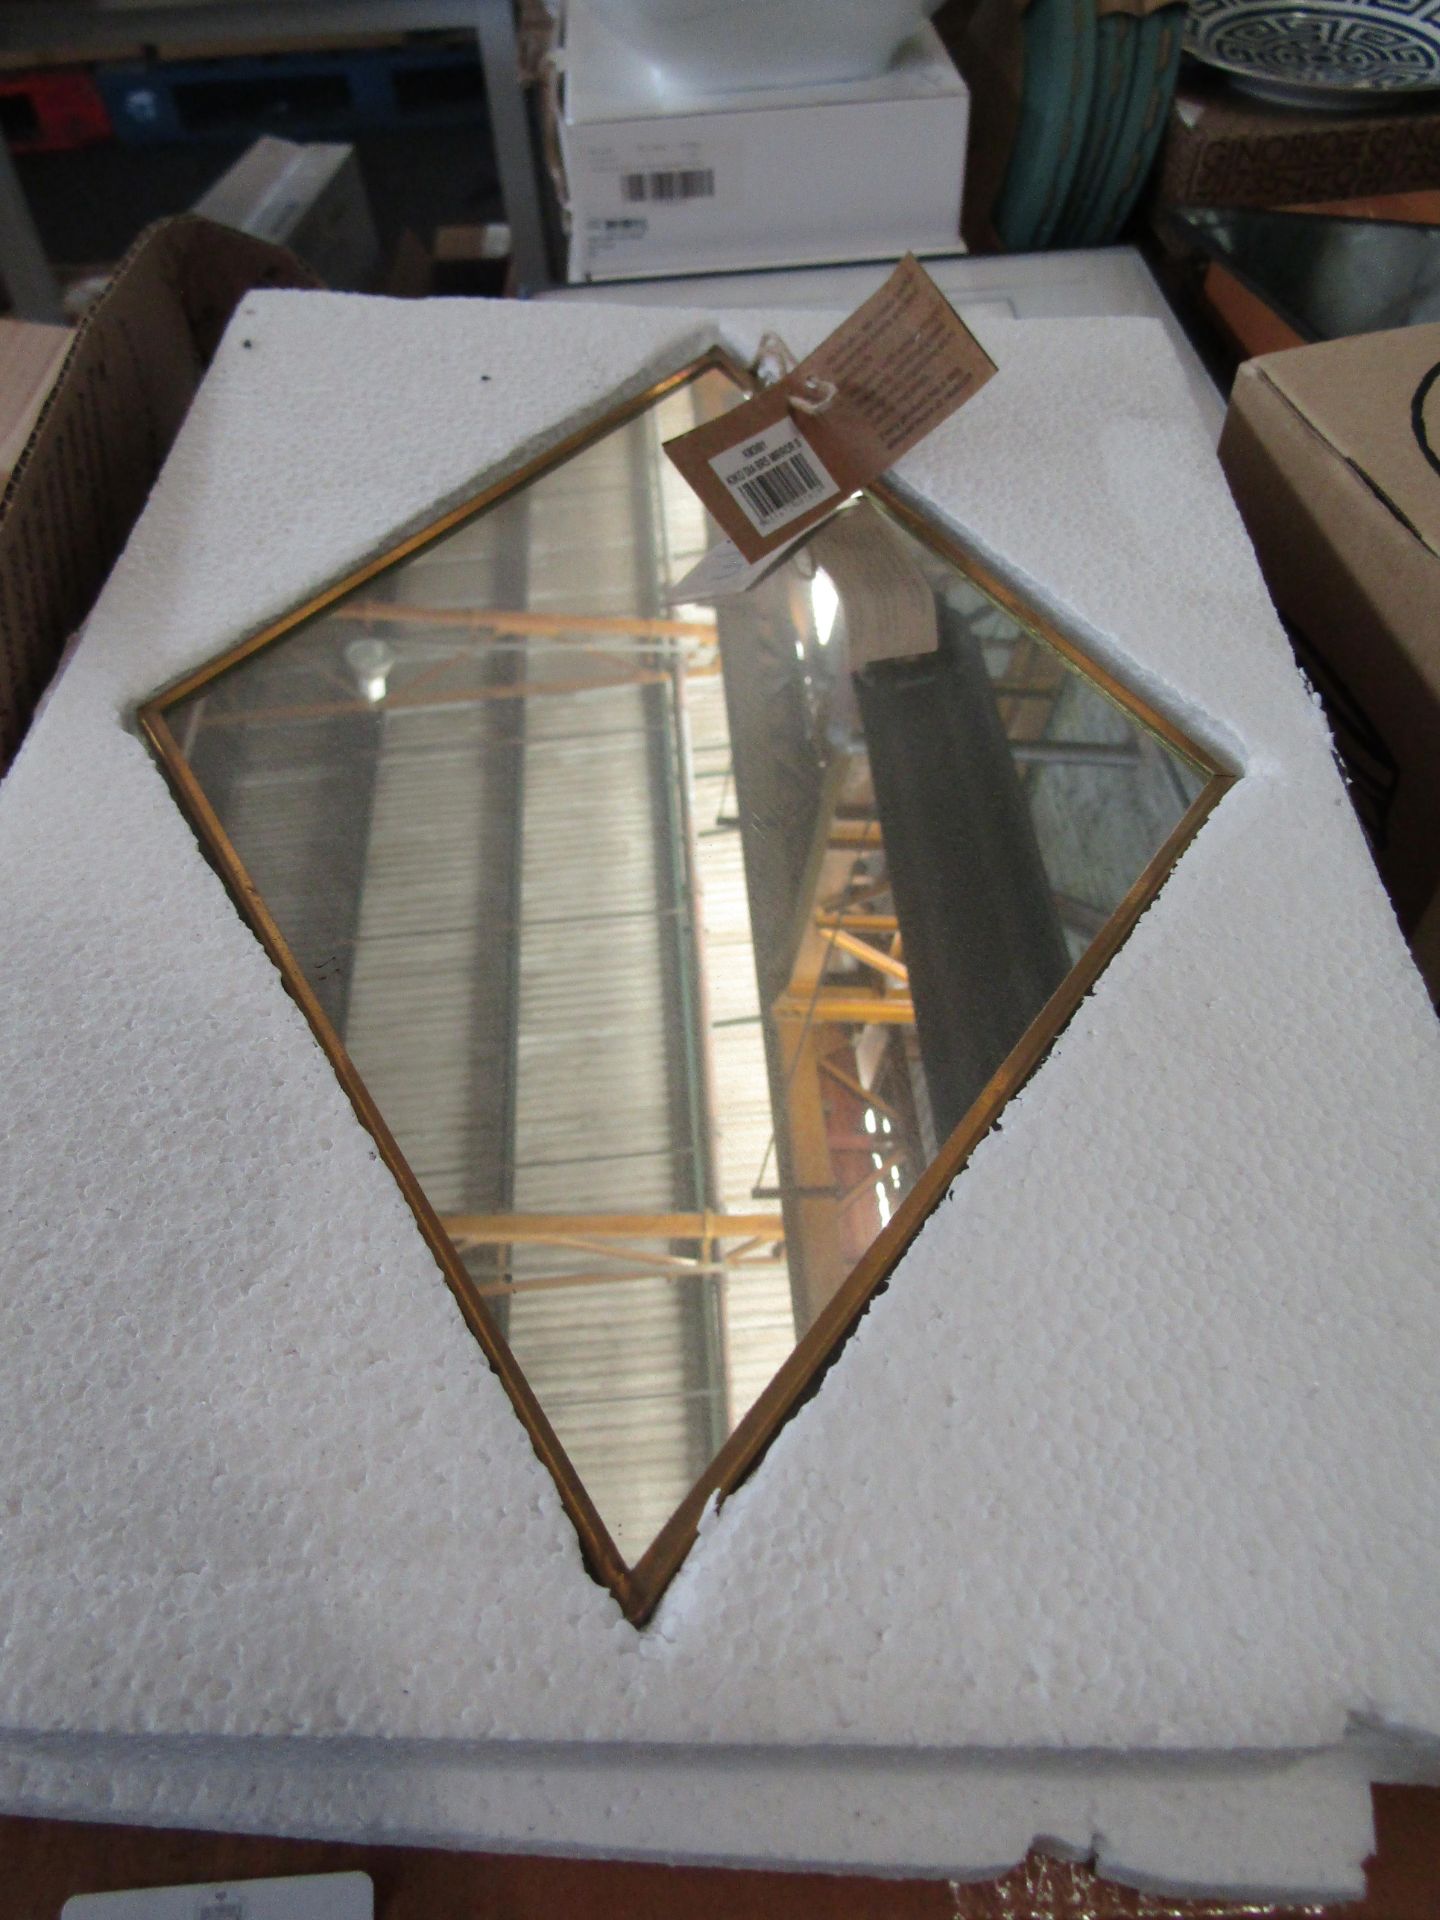 Brass Rim Mirror - Small H31 x W21 x D0.5cm - New & Boxed. (206)